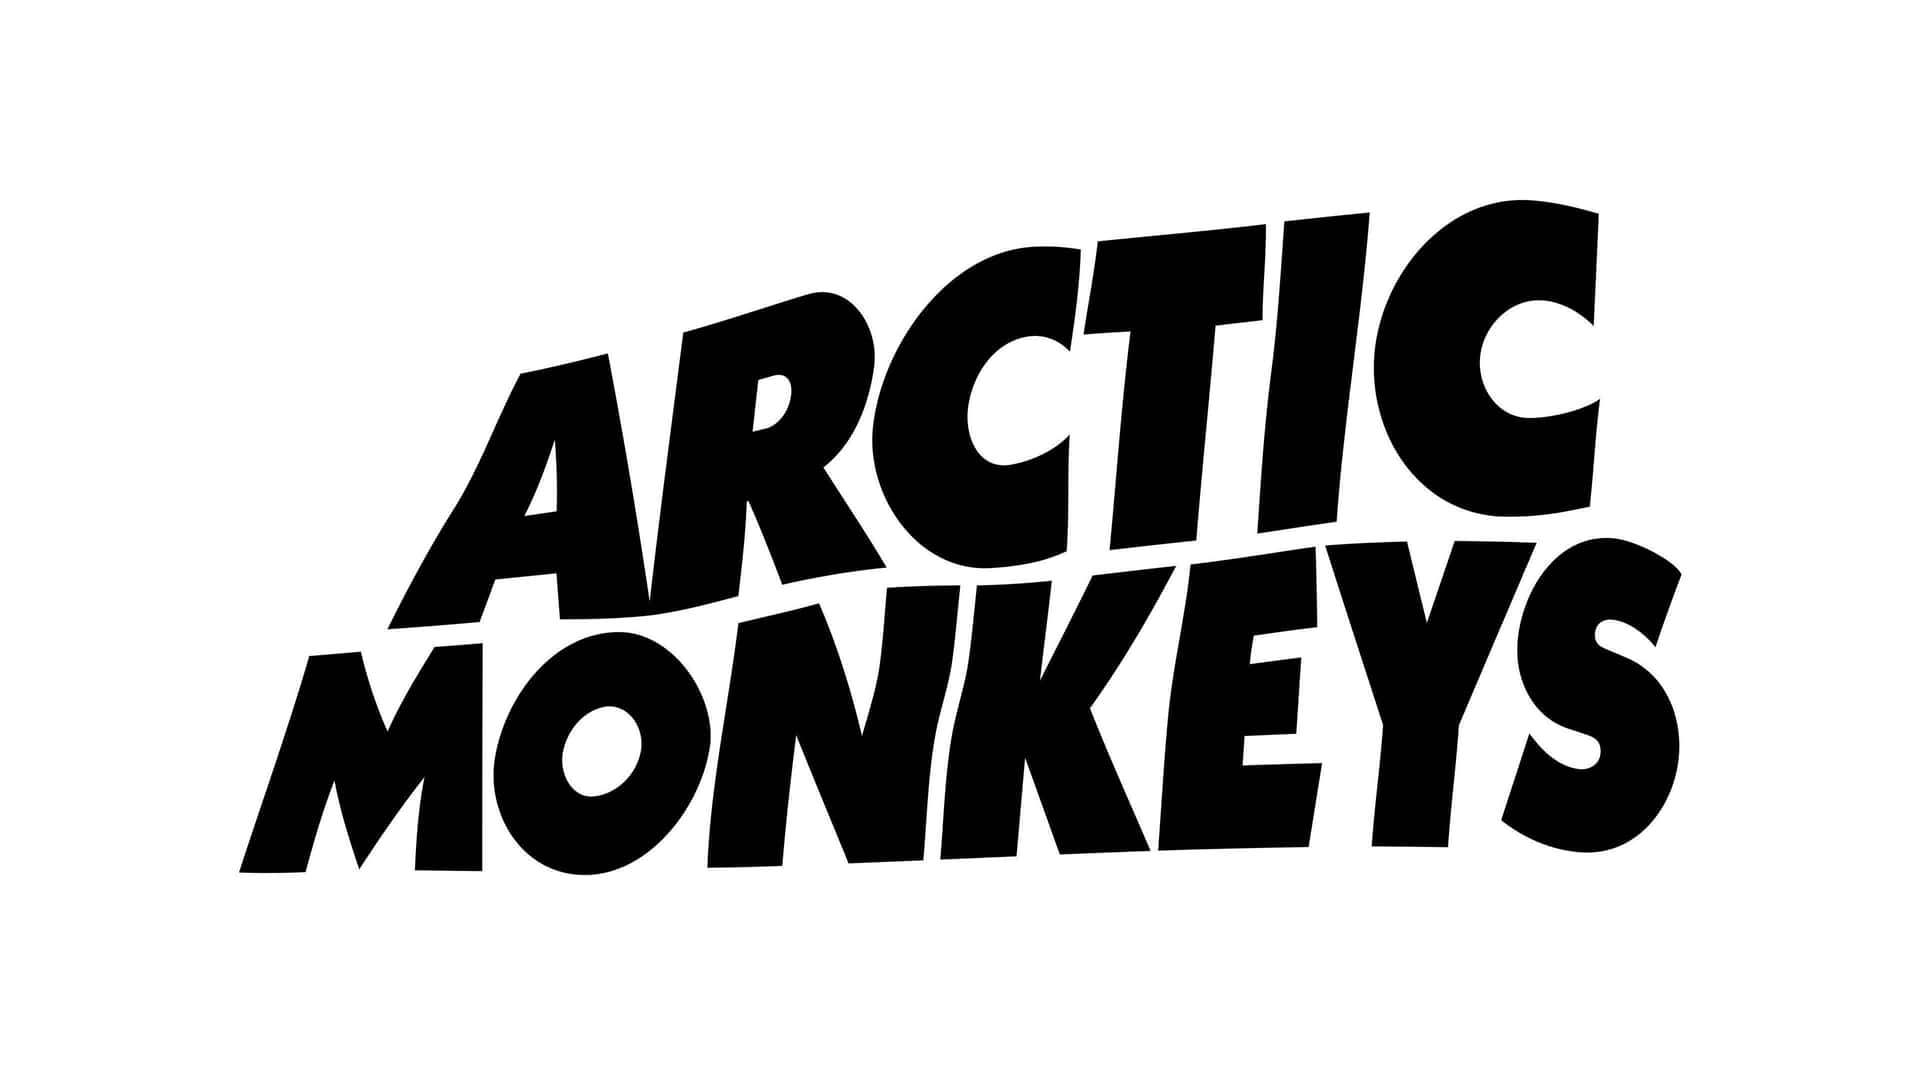 Arctic Monkeys Band Logo